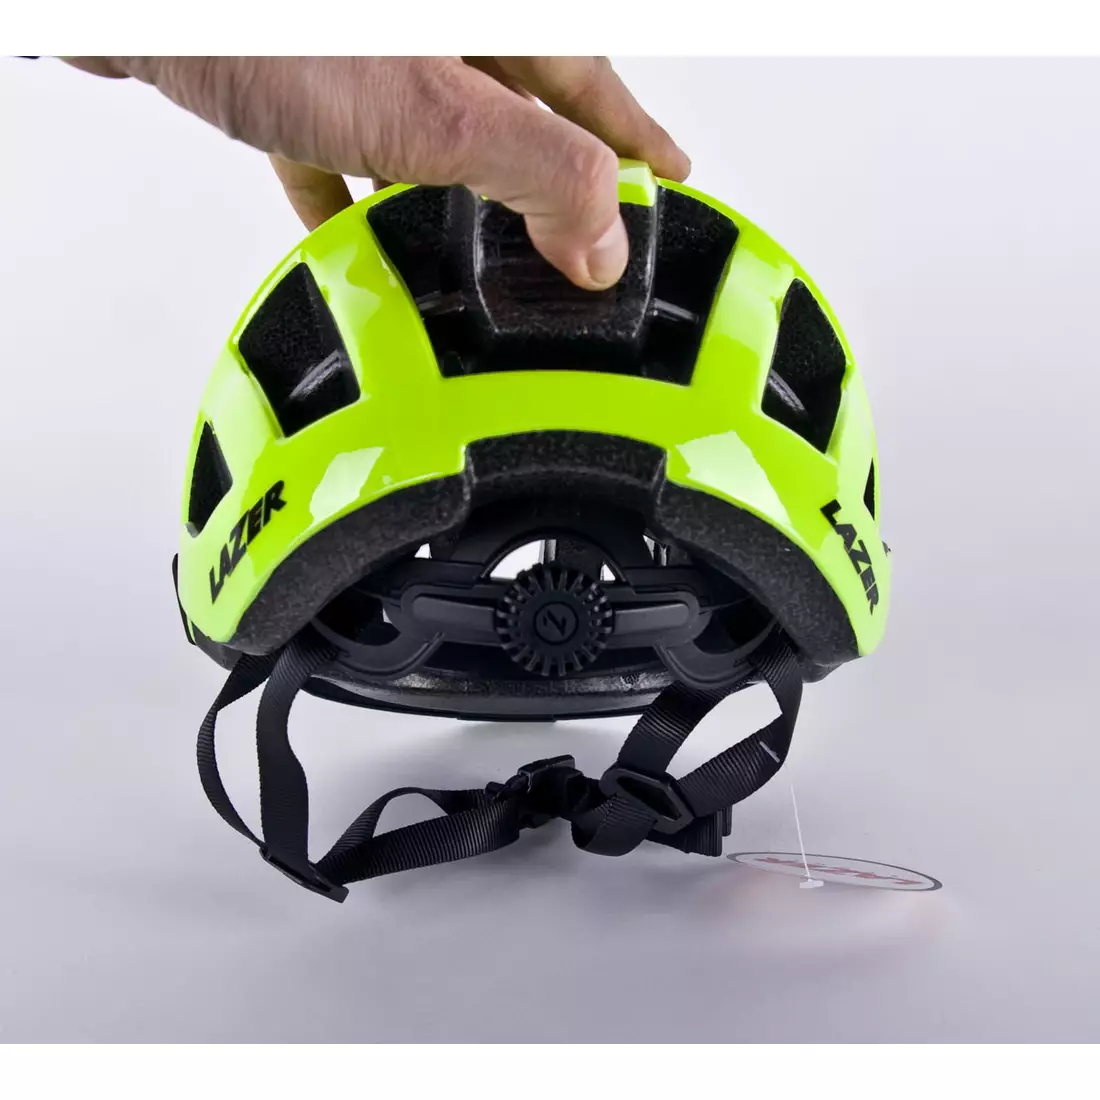 LAZER Compact bicycle helmet gelb